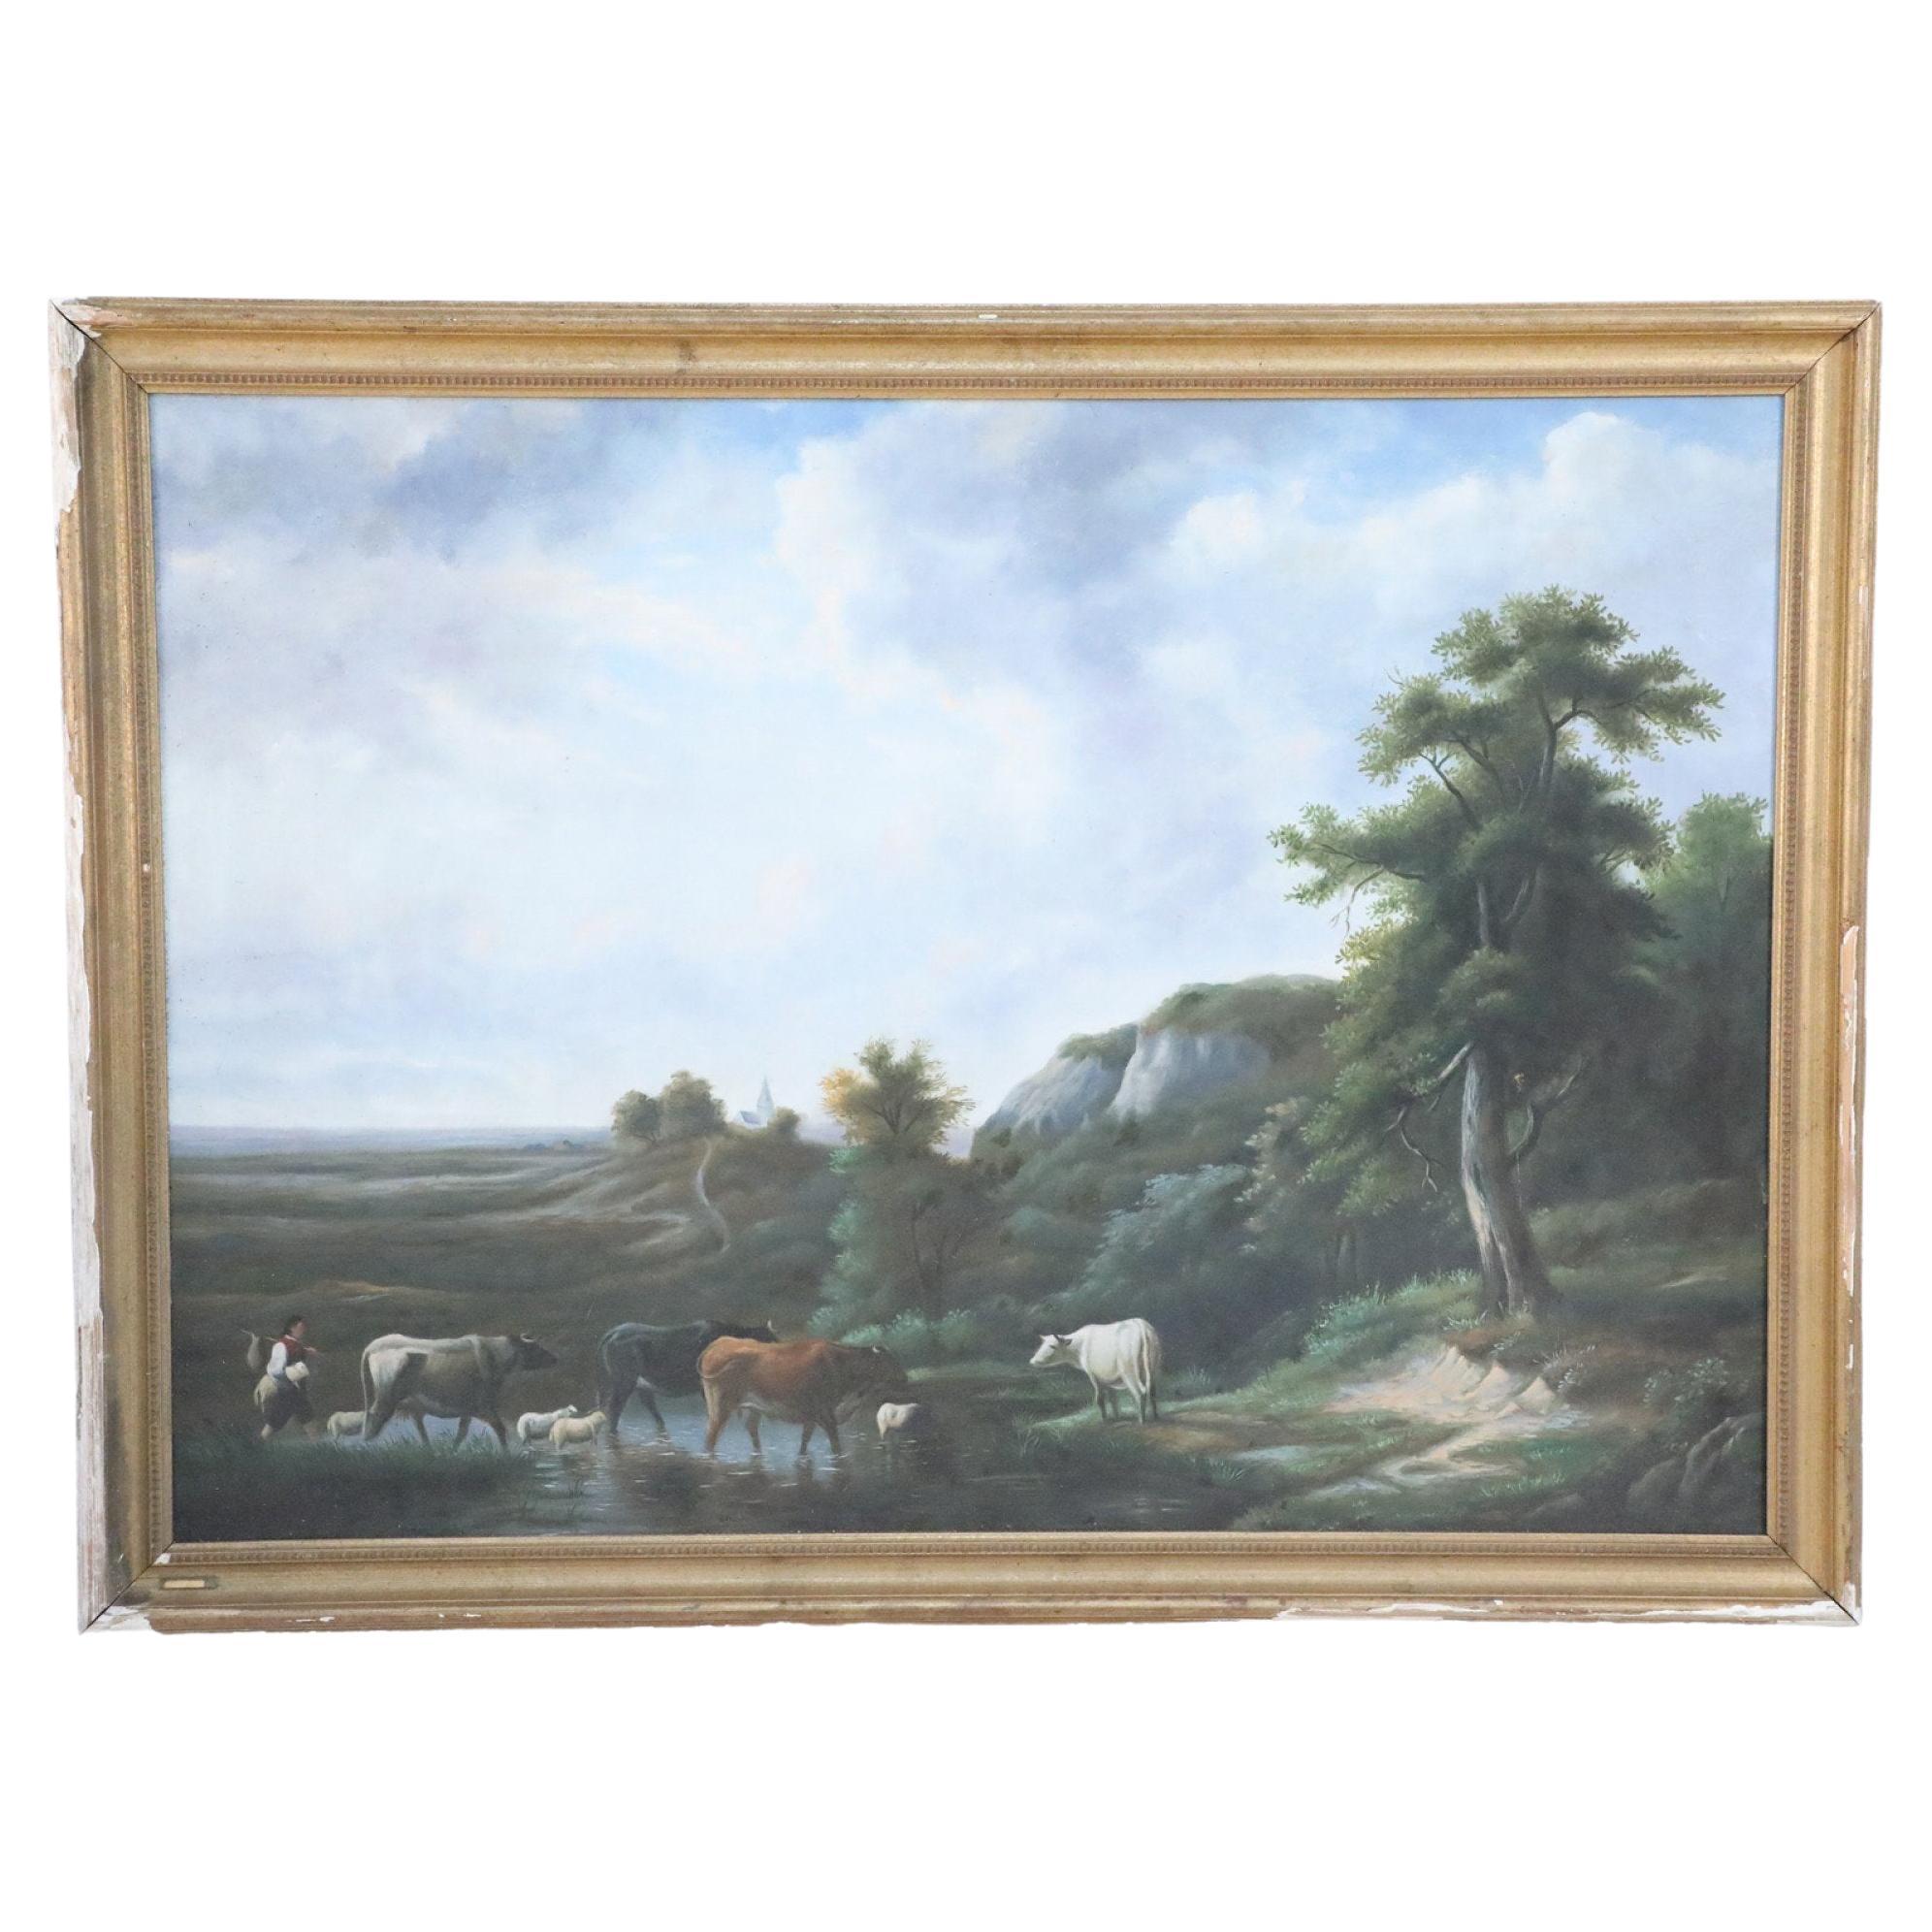 Framed Herder and Cattle Landscape Oil Painting